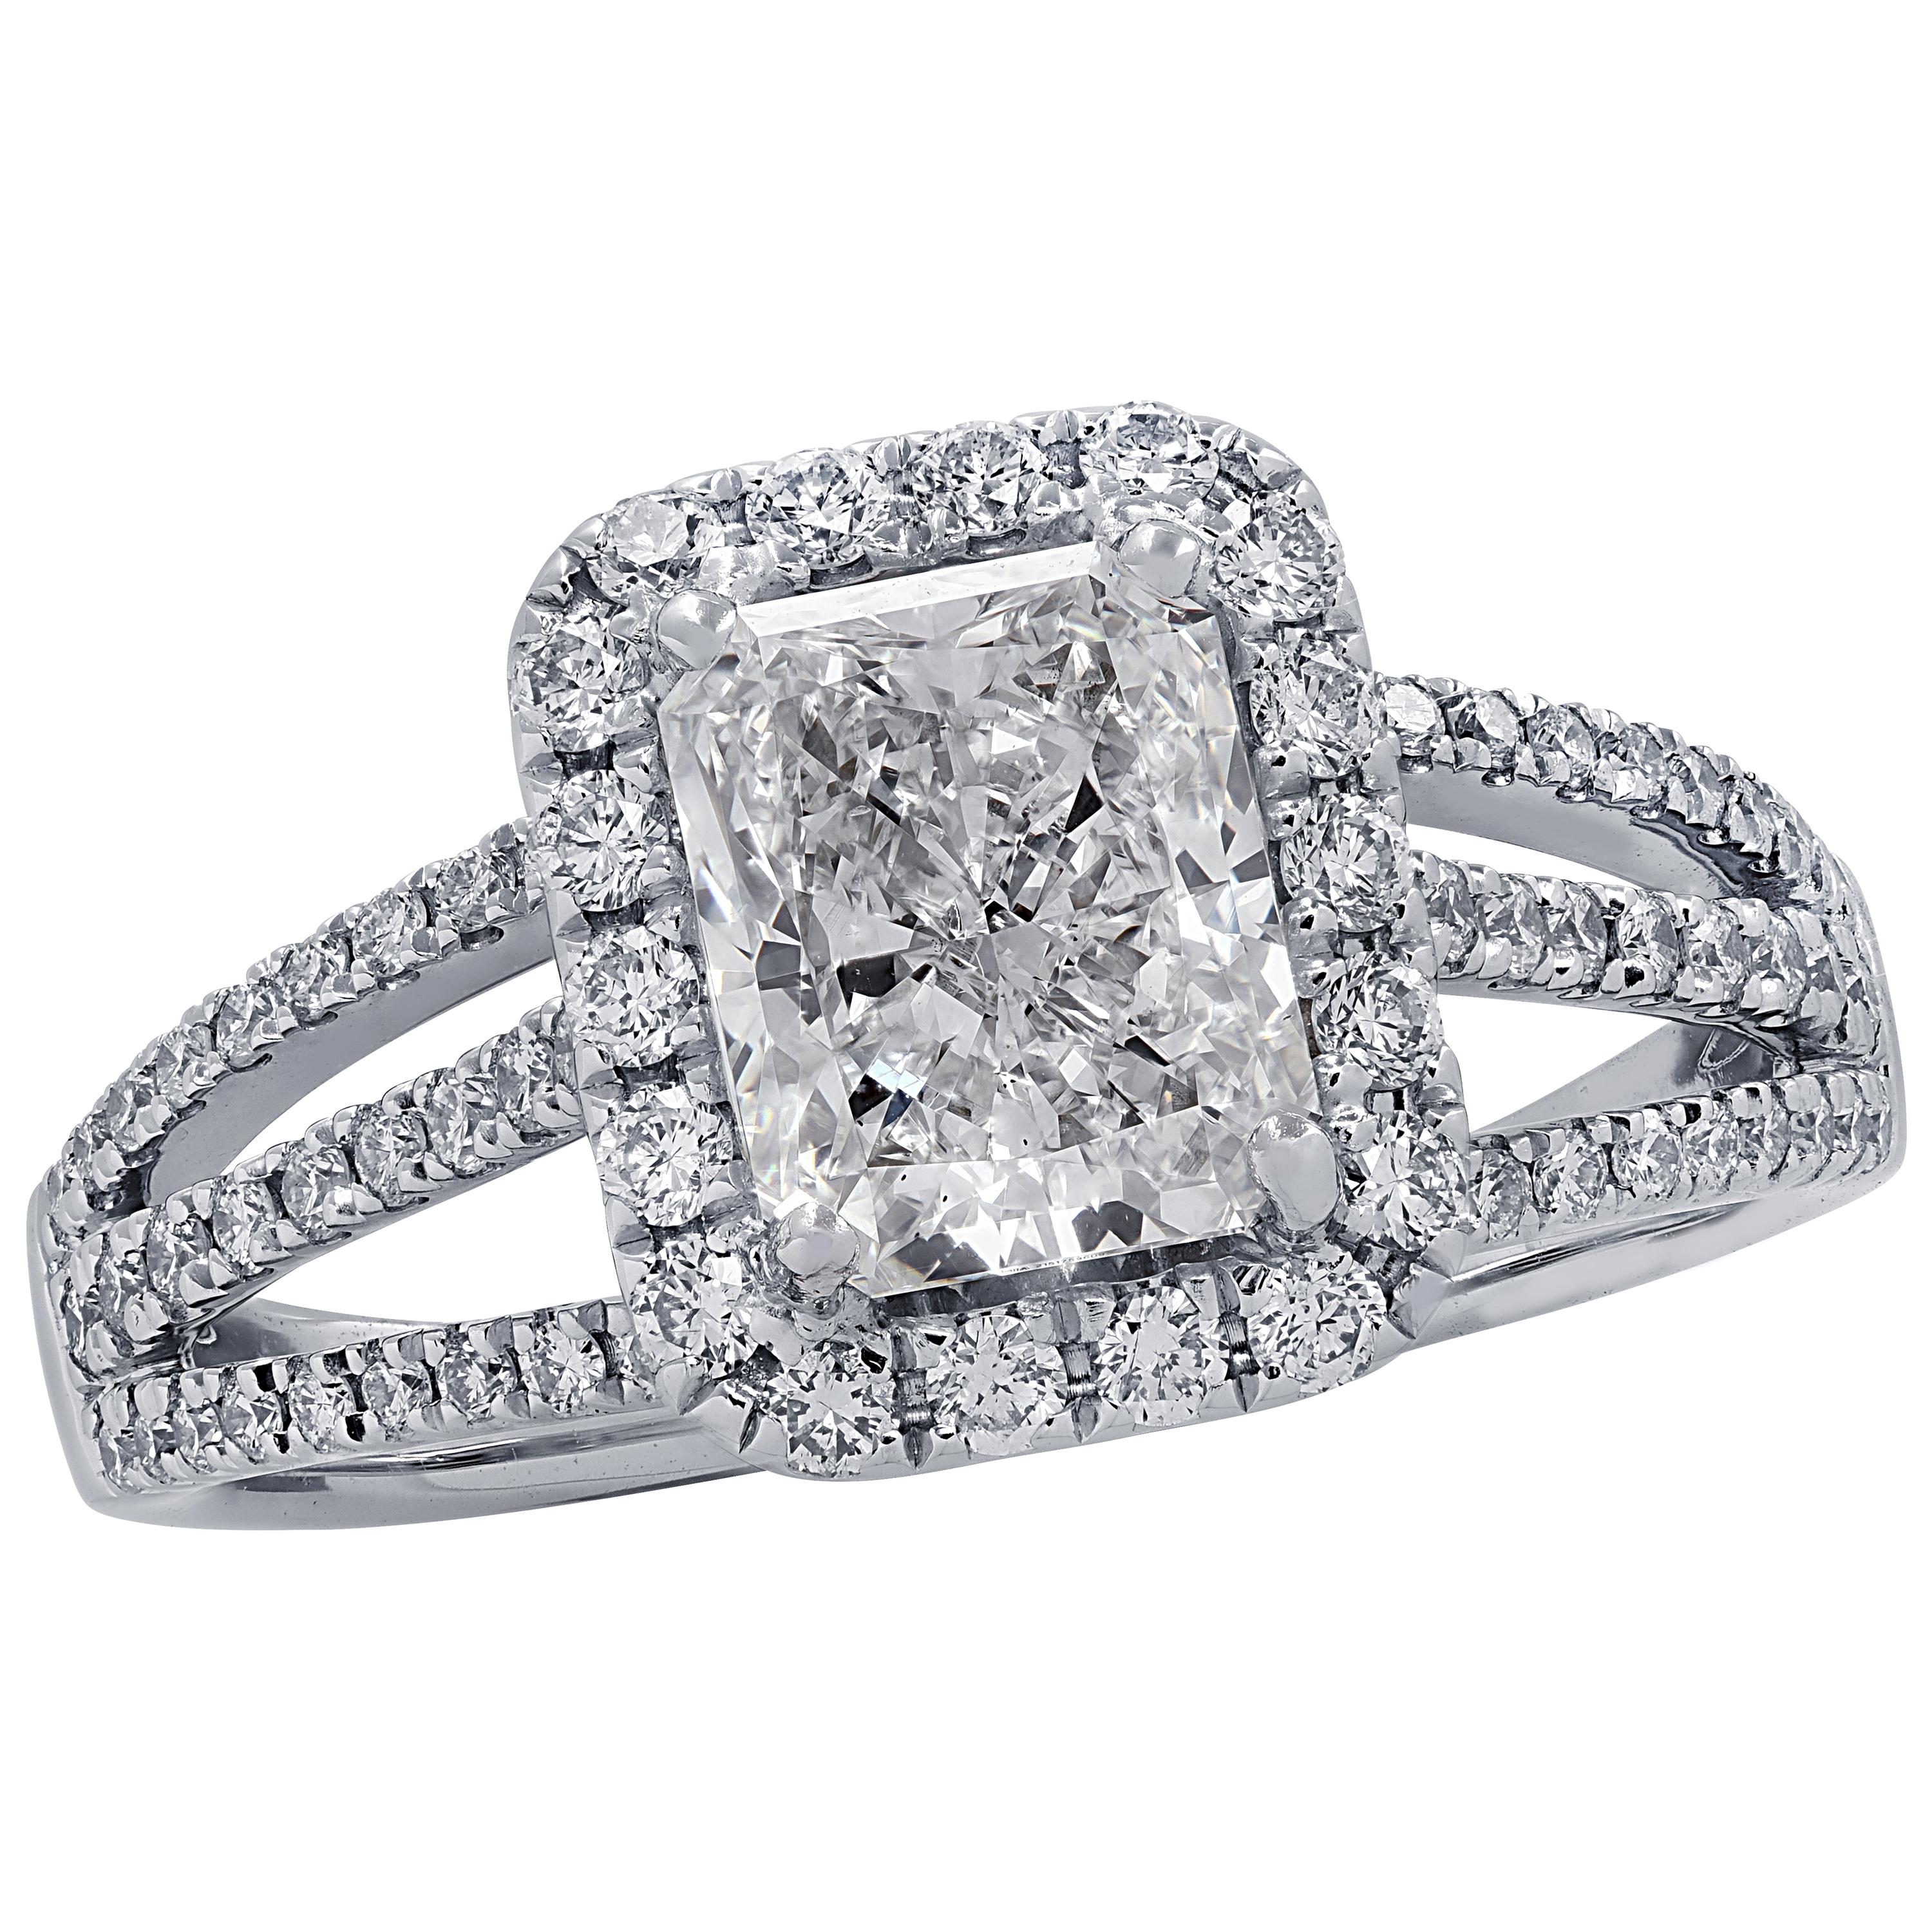 Vivid Diamonds 1.51 Carat Diamond Engagement Ring